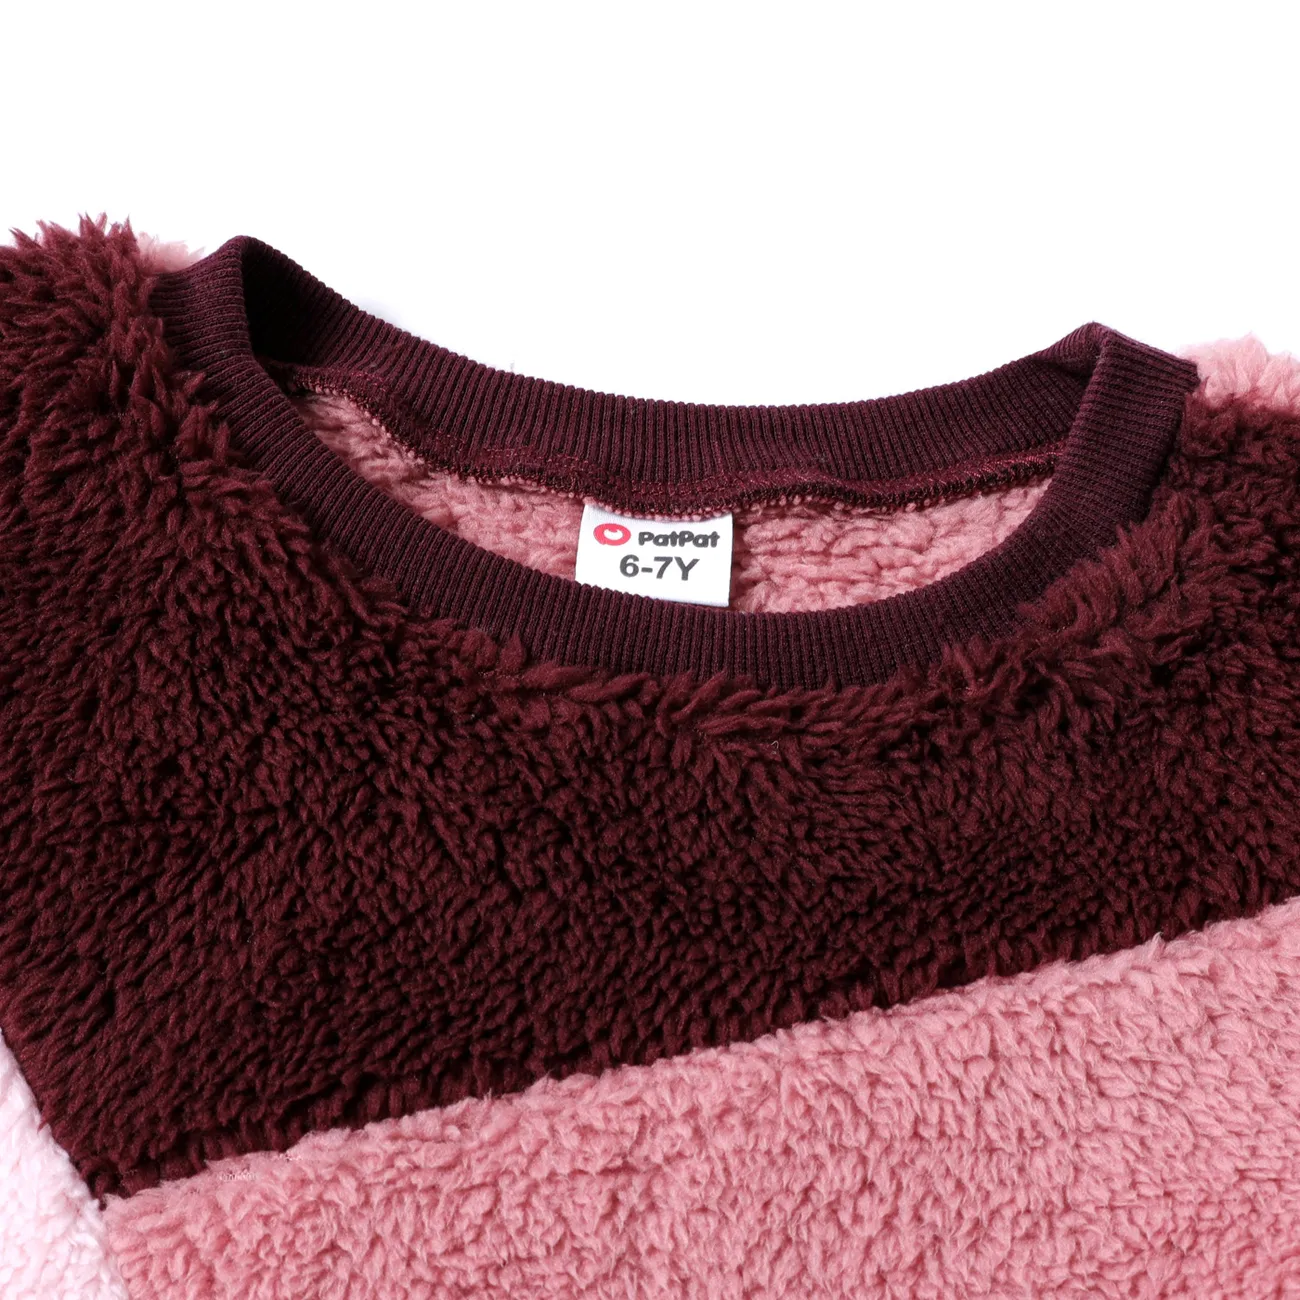 Kid Girl Sweet Colorblock Fleece Pullover Sweatshirt Red big image 1